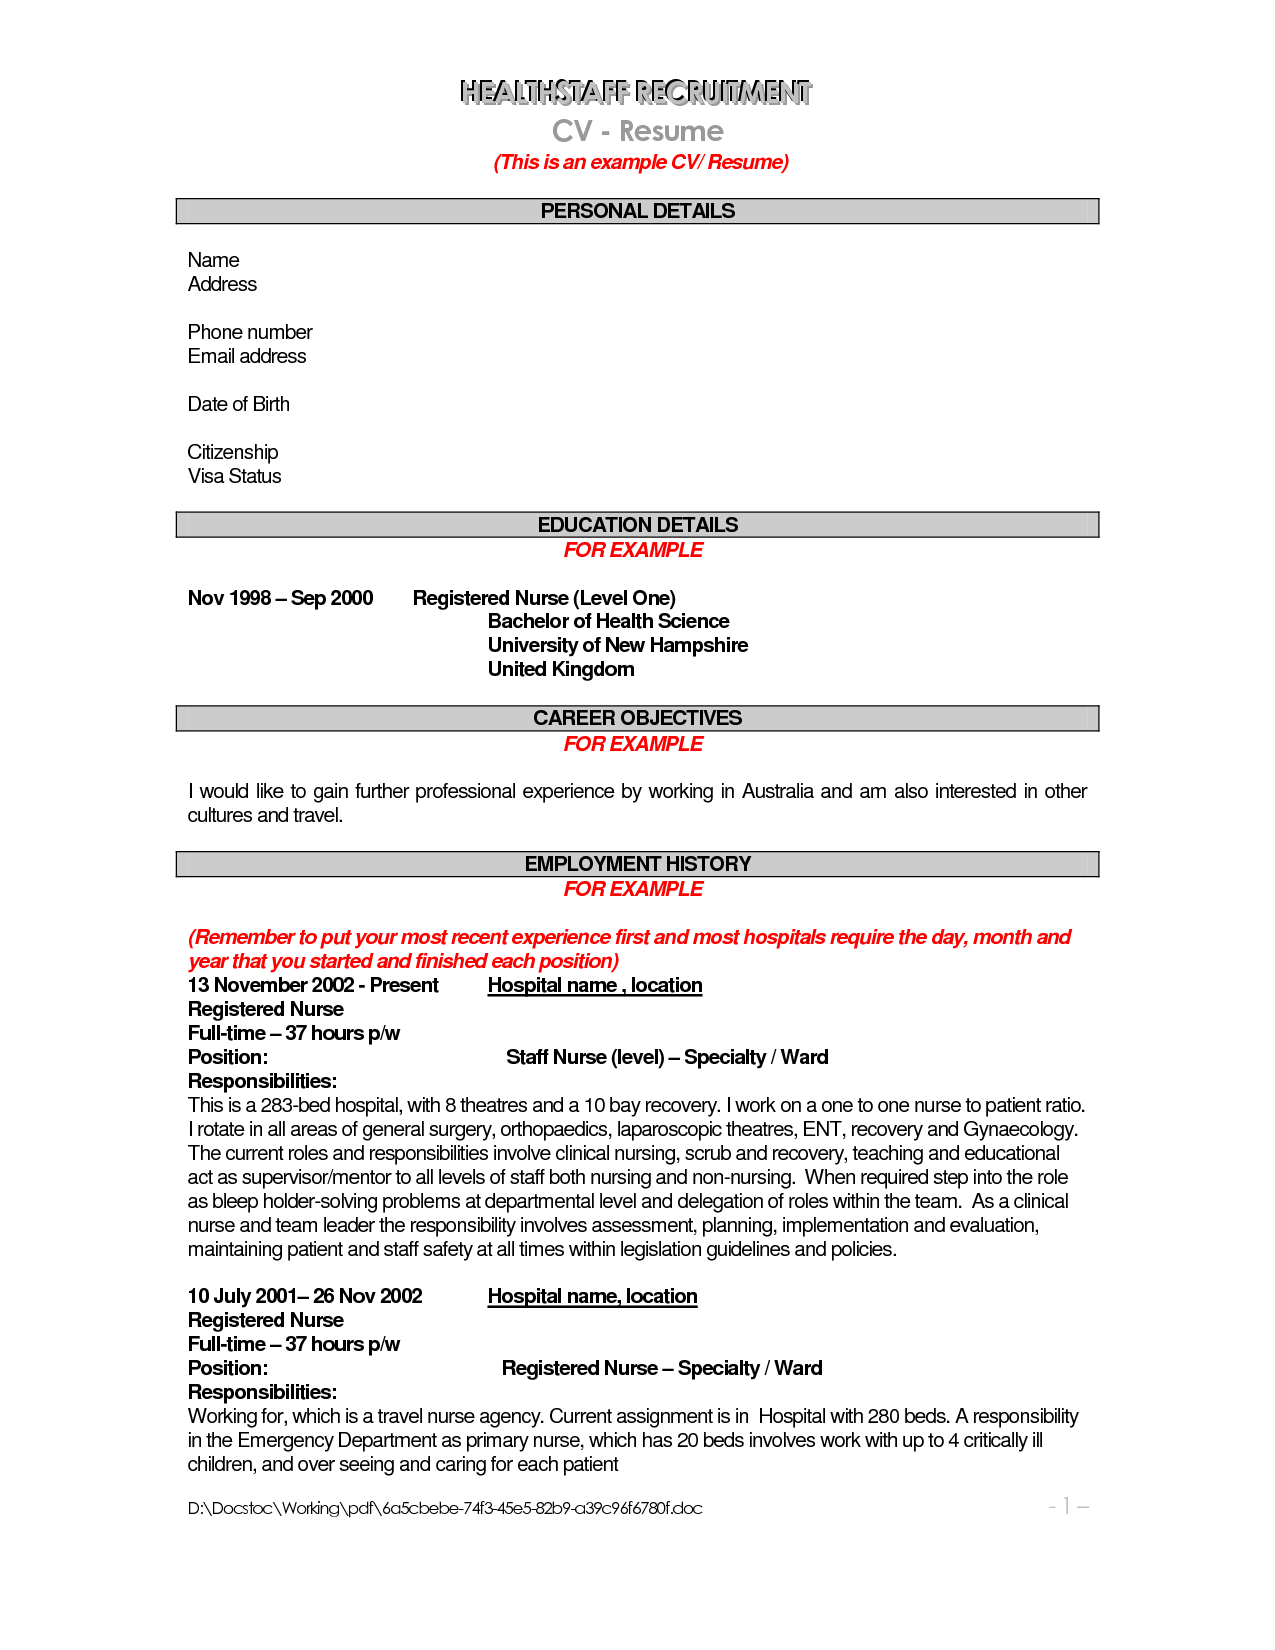 Resume Job Descriptions pusatkroto.Com